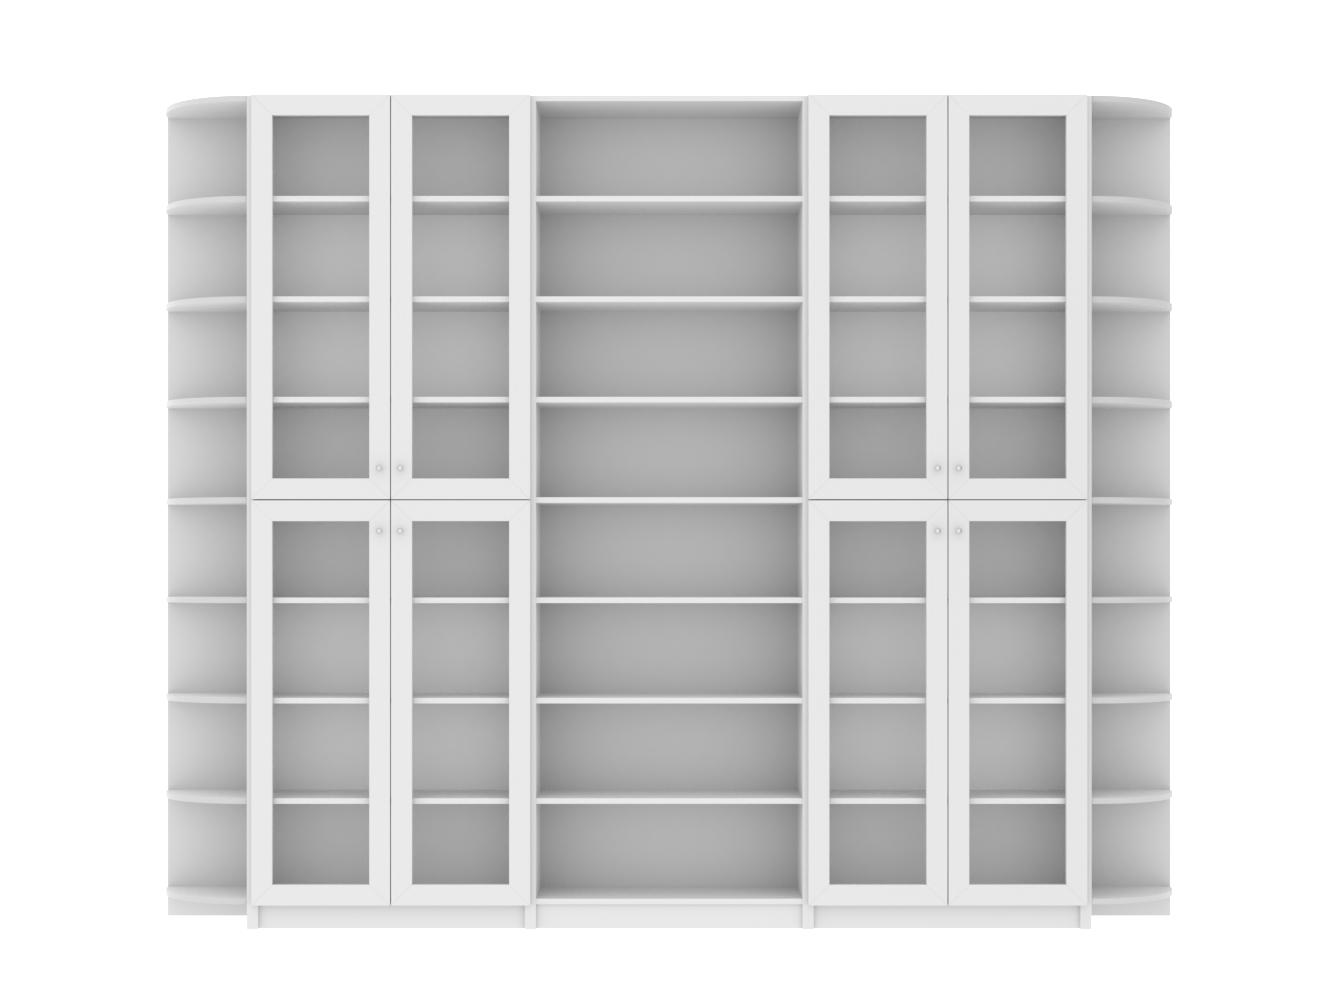  Книжный шкаф Билли 425 white ИКЕА (IKEA) изображение товара